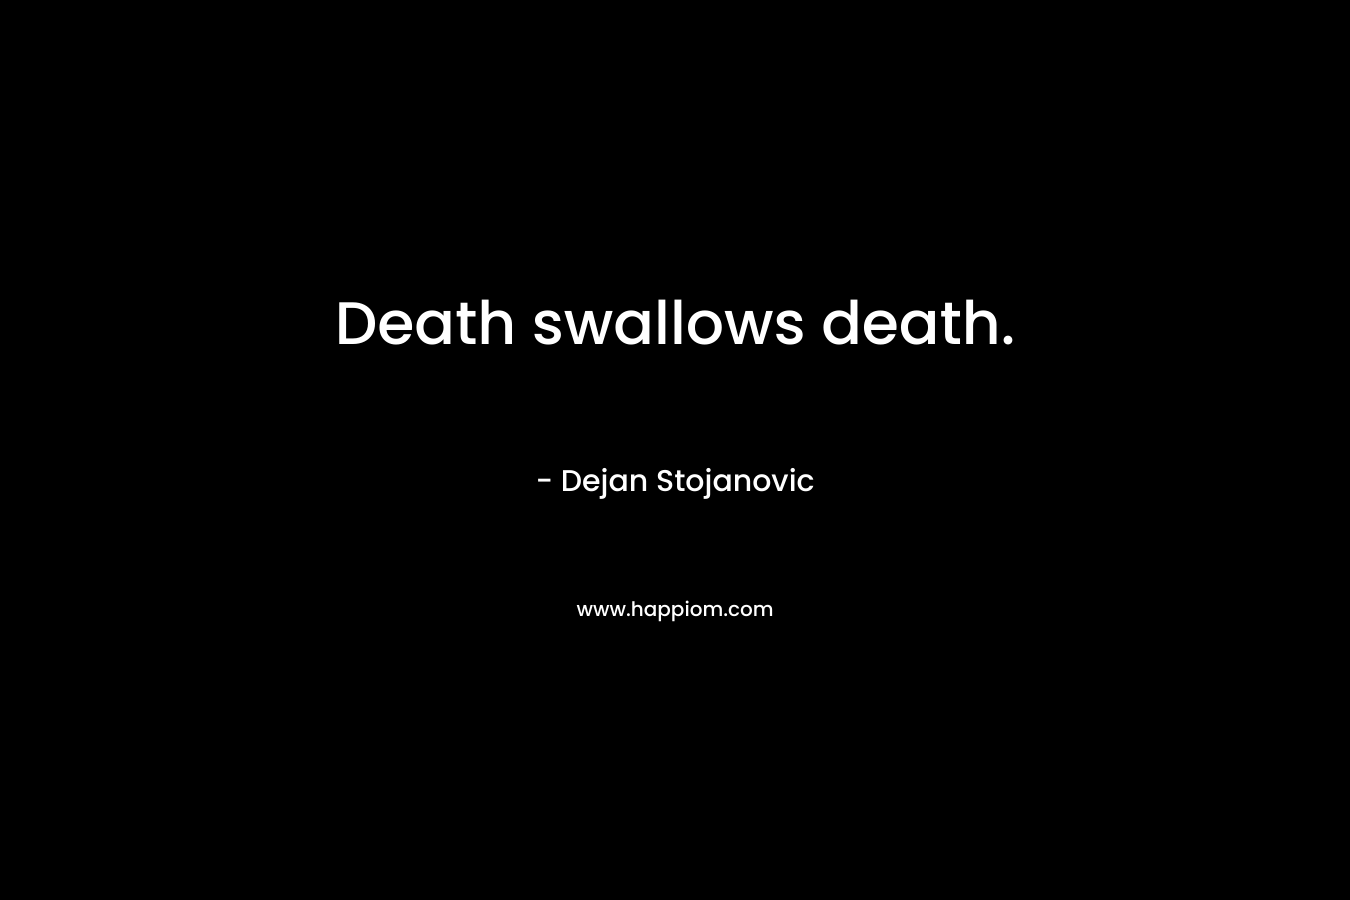 Death swallows death. – Dejan Stojanovic